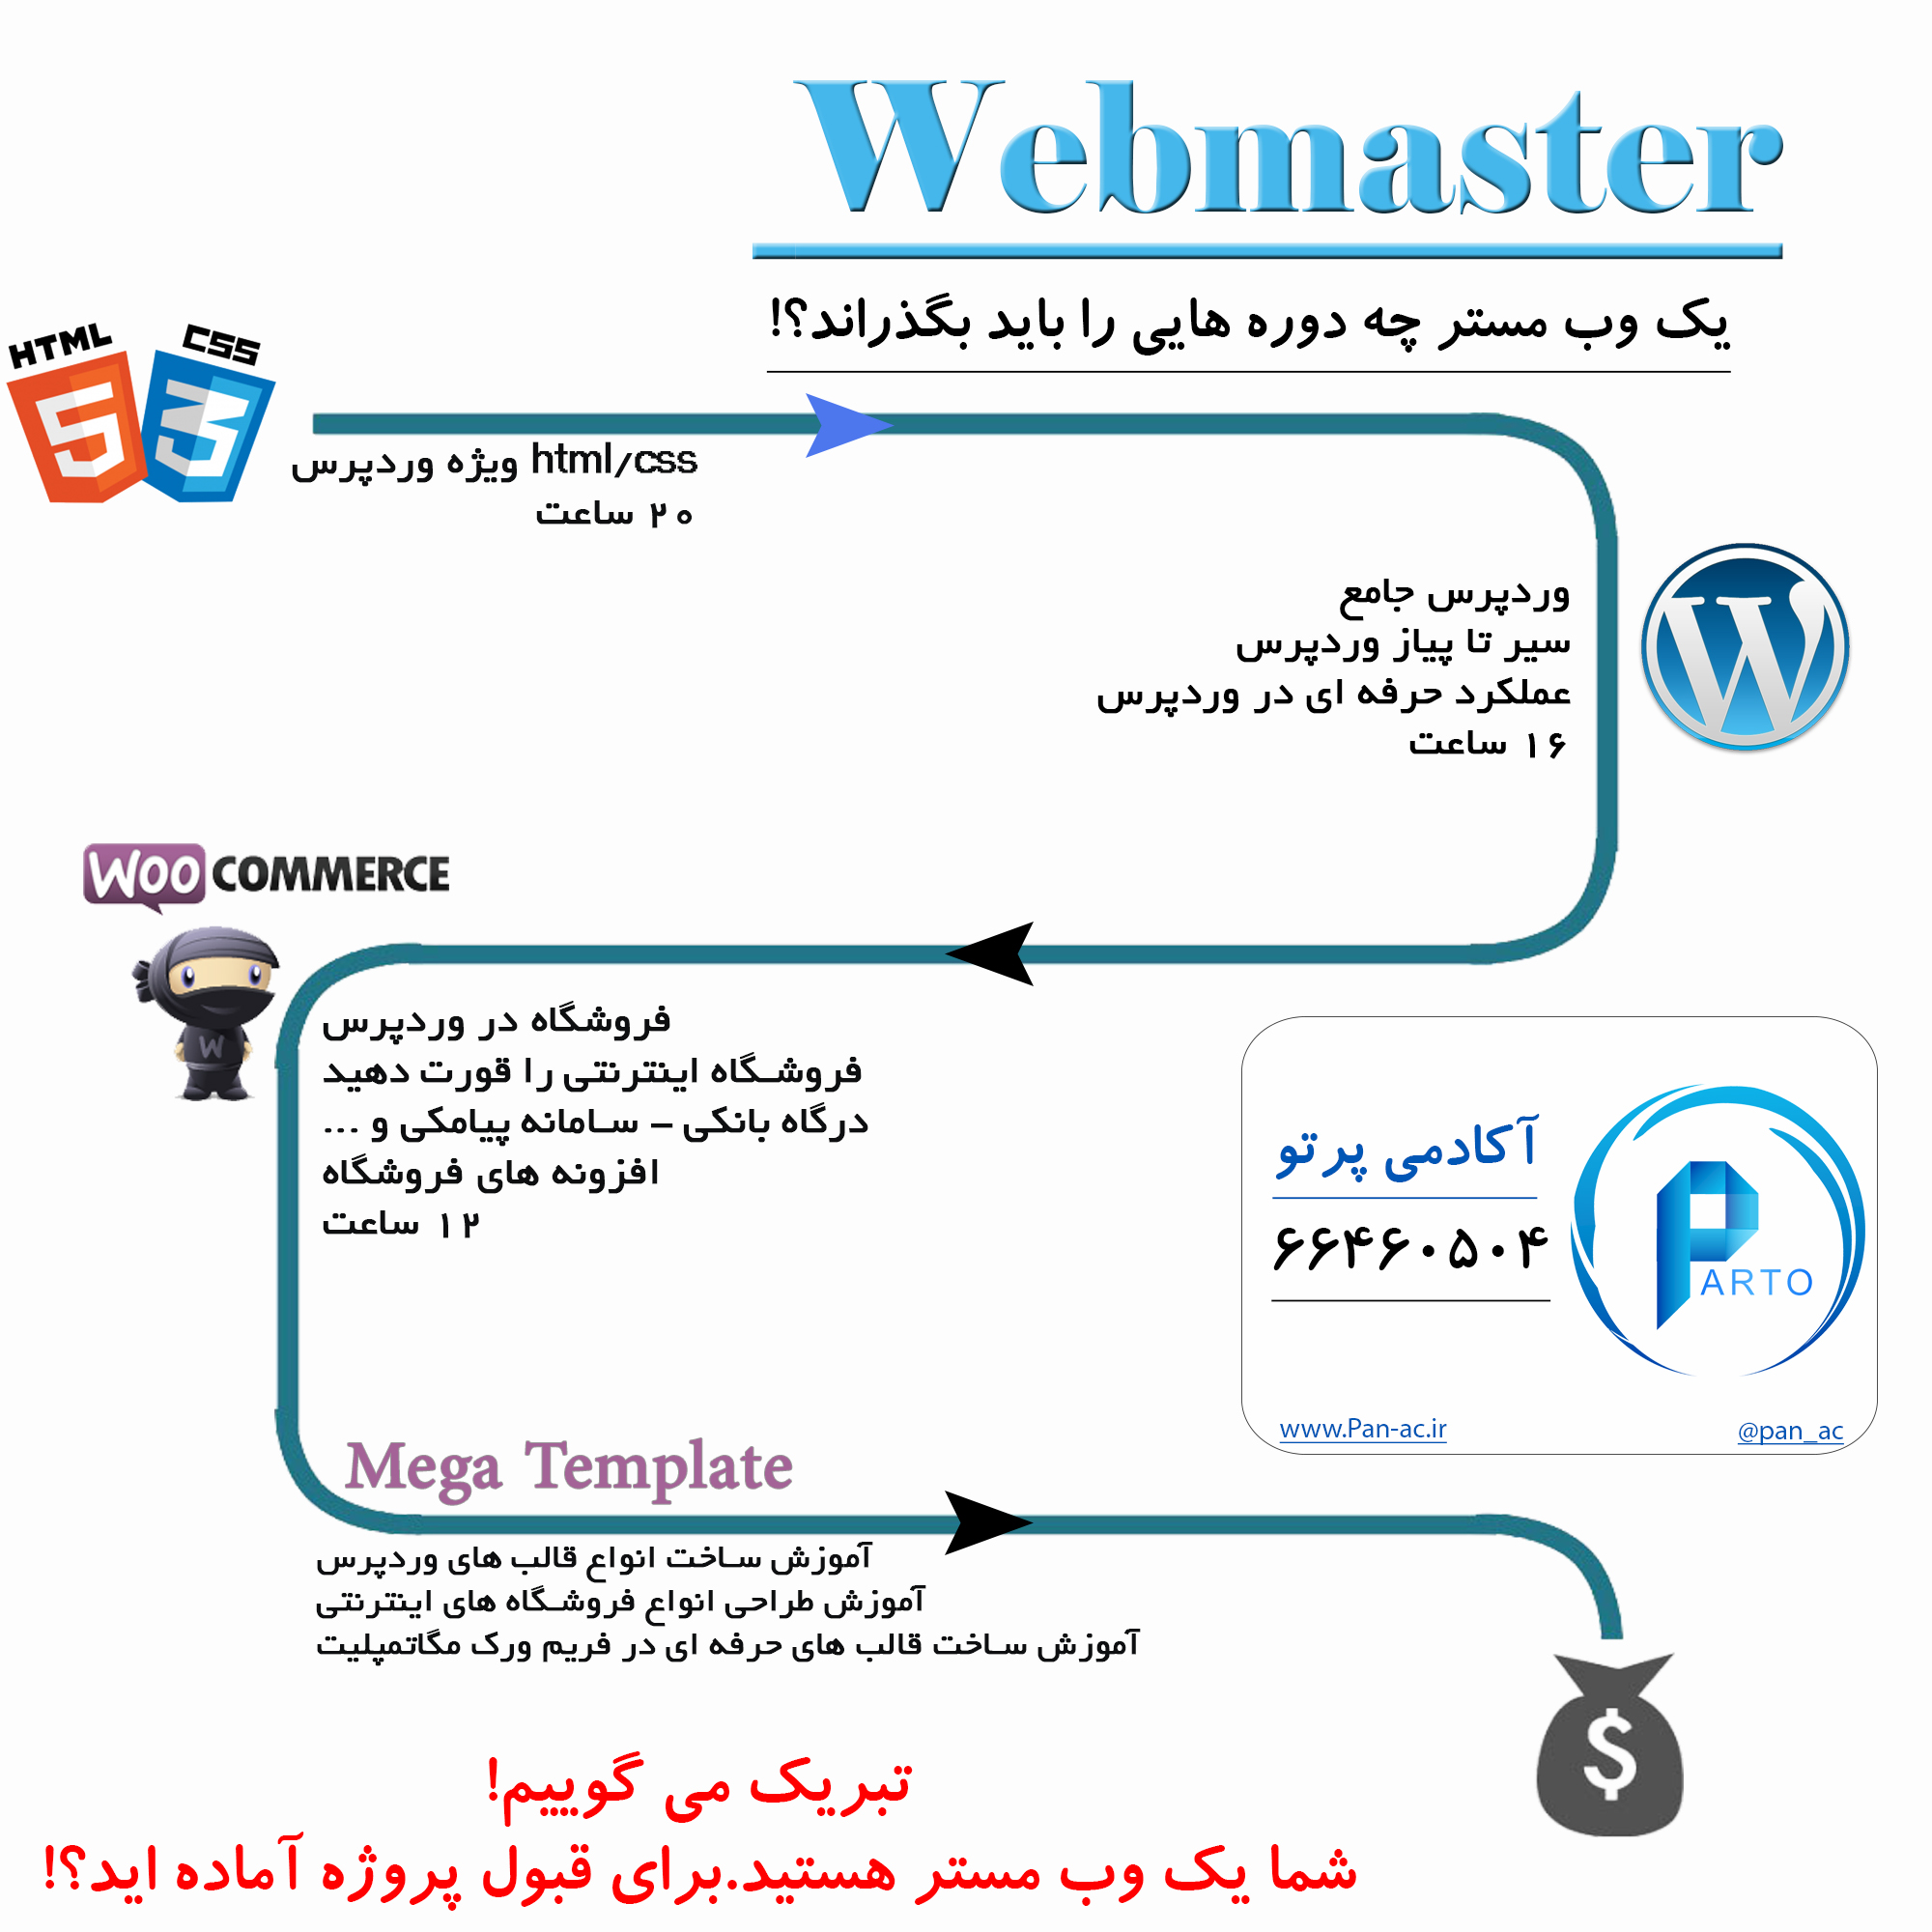 web master